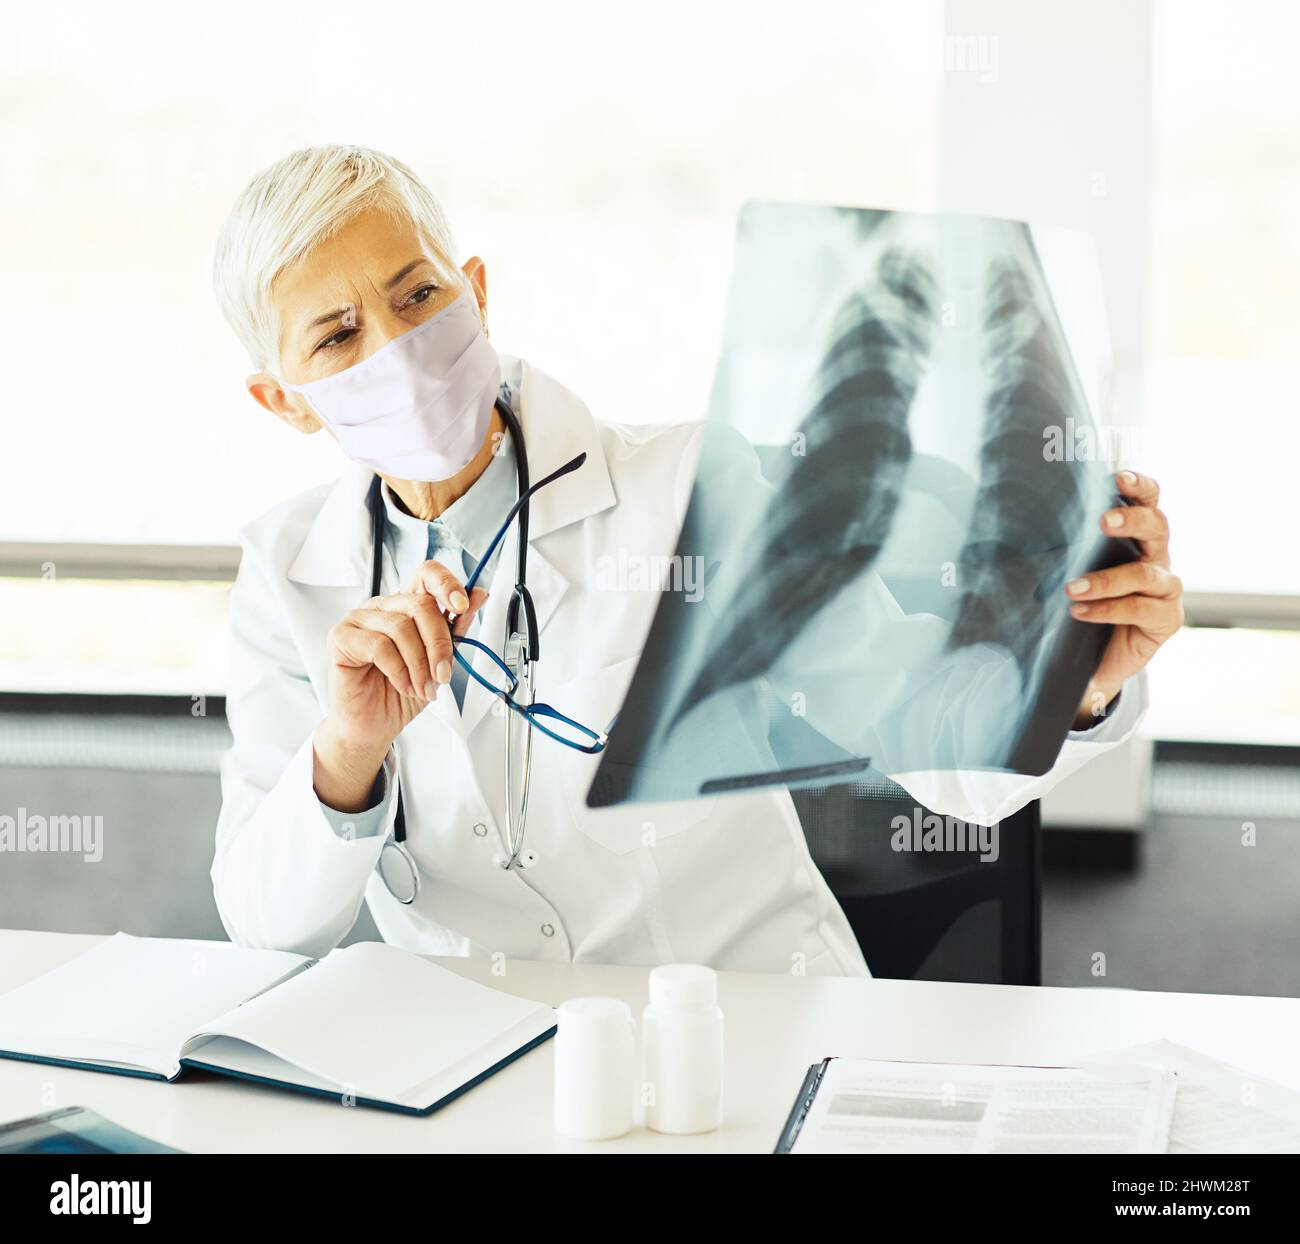 doctor hospital medical medicine health x-ray healthcare radiology care diagnosis xray senior virus mask Stock Photo